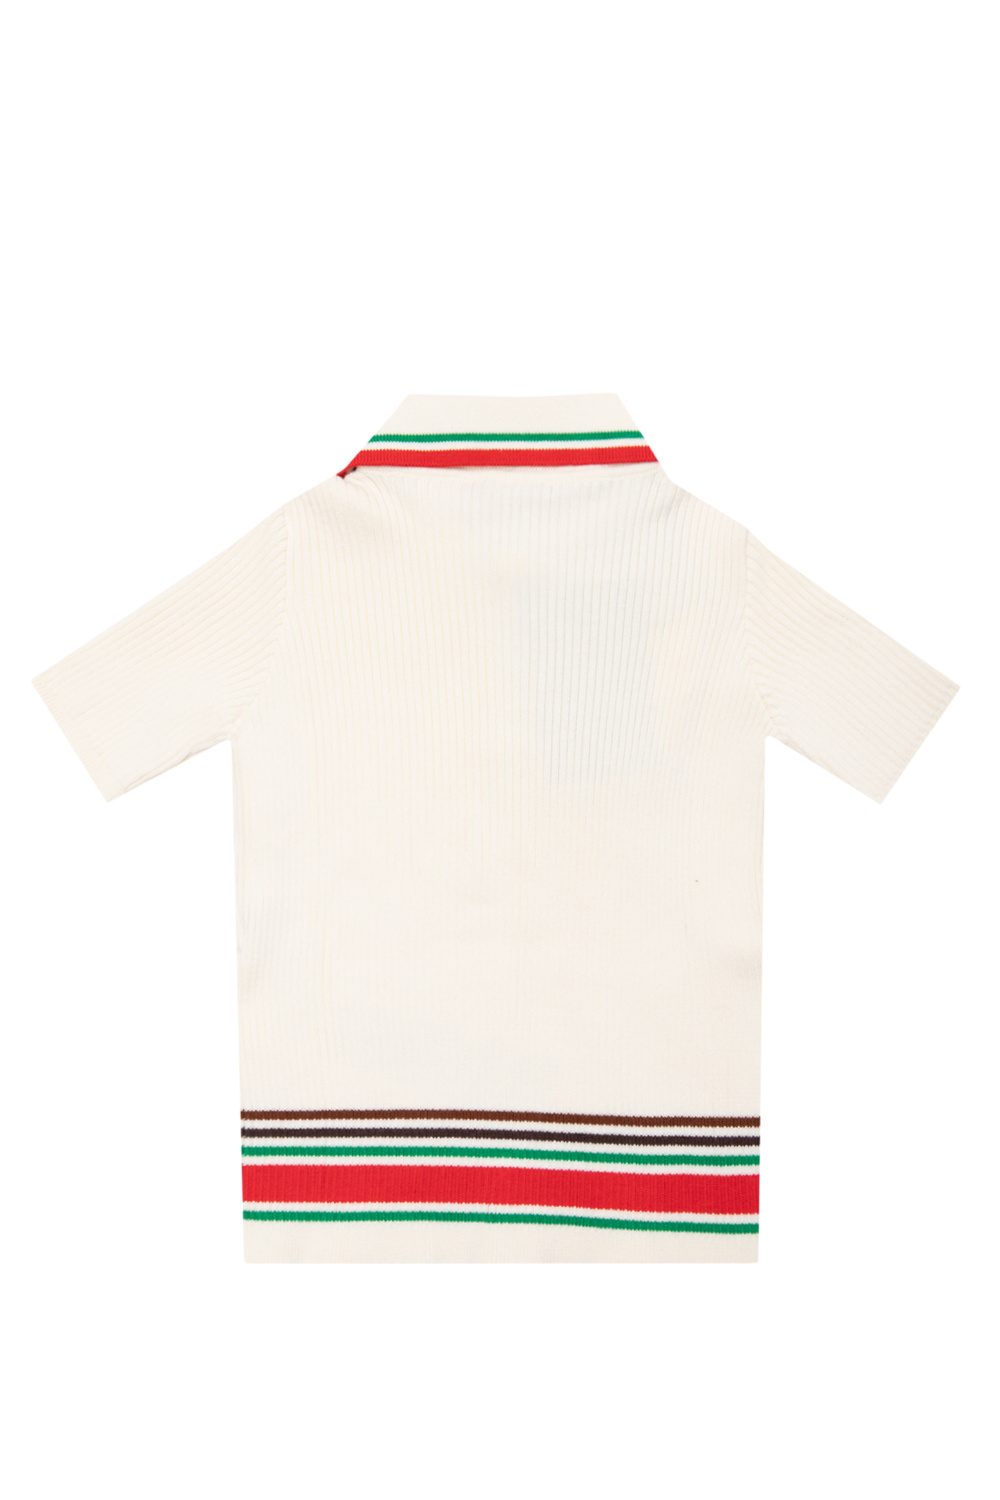 Louis Vuitton Rainbow Monogram Short-Sleeved Denim Shirt - Vitkac shop  online